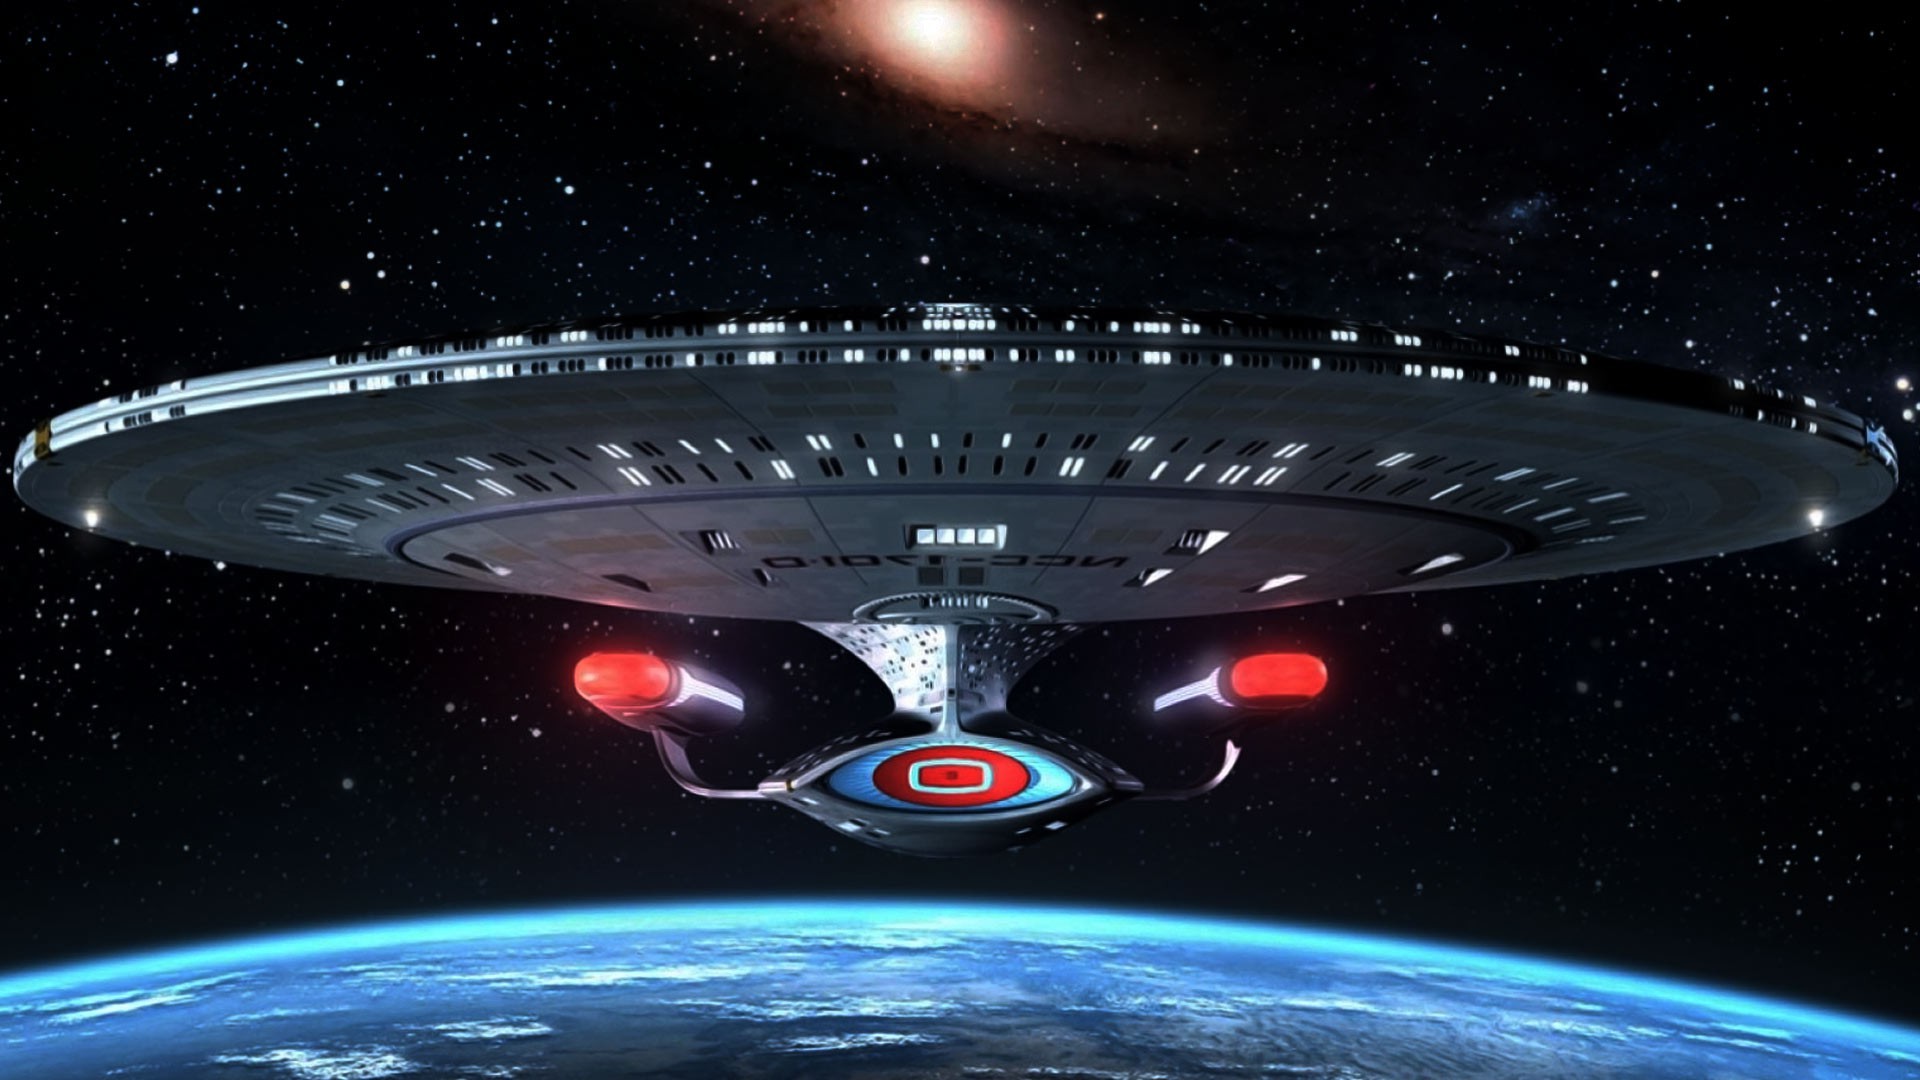 Star Trek, USS Enterprise spaceship Wallpapers HD / Desktop and Mobile Backgrounds